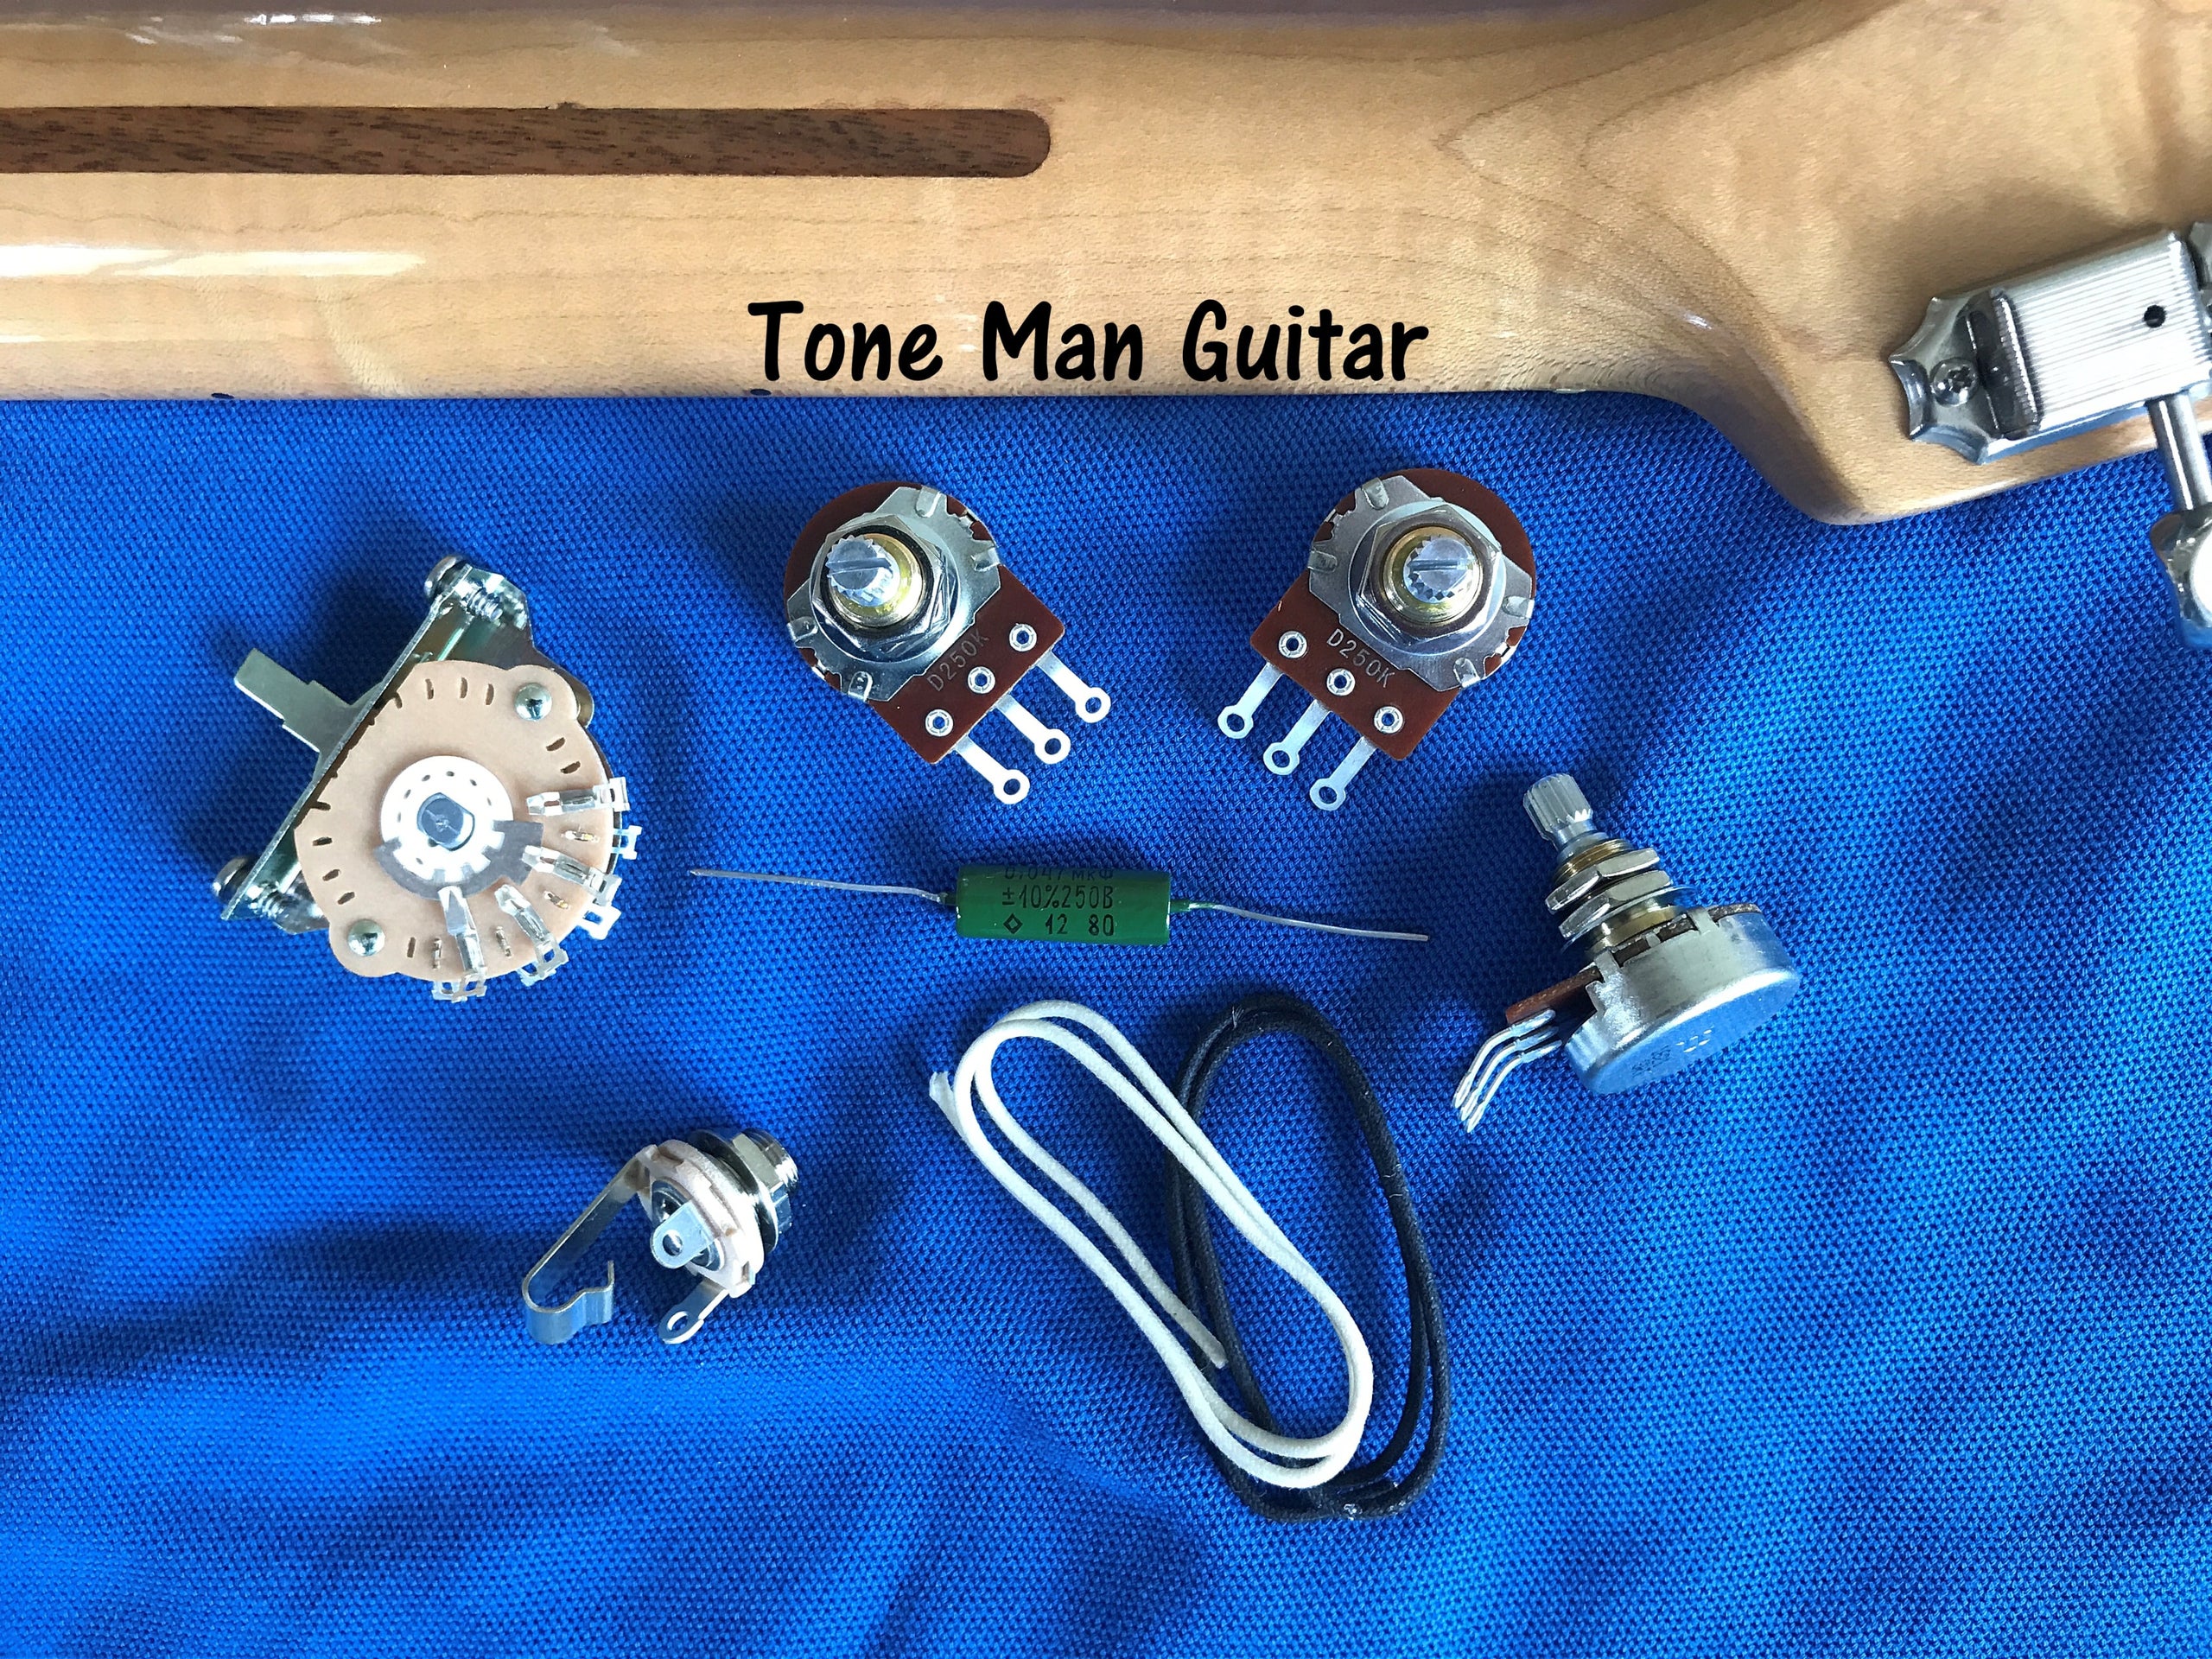 Fender Stratocaster wiring upgrade kit. PIO tone caps, 5 way